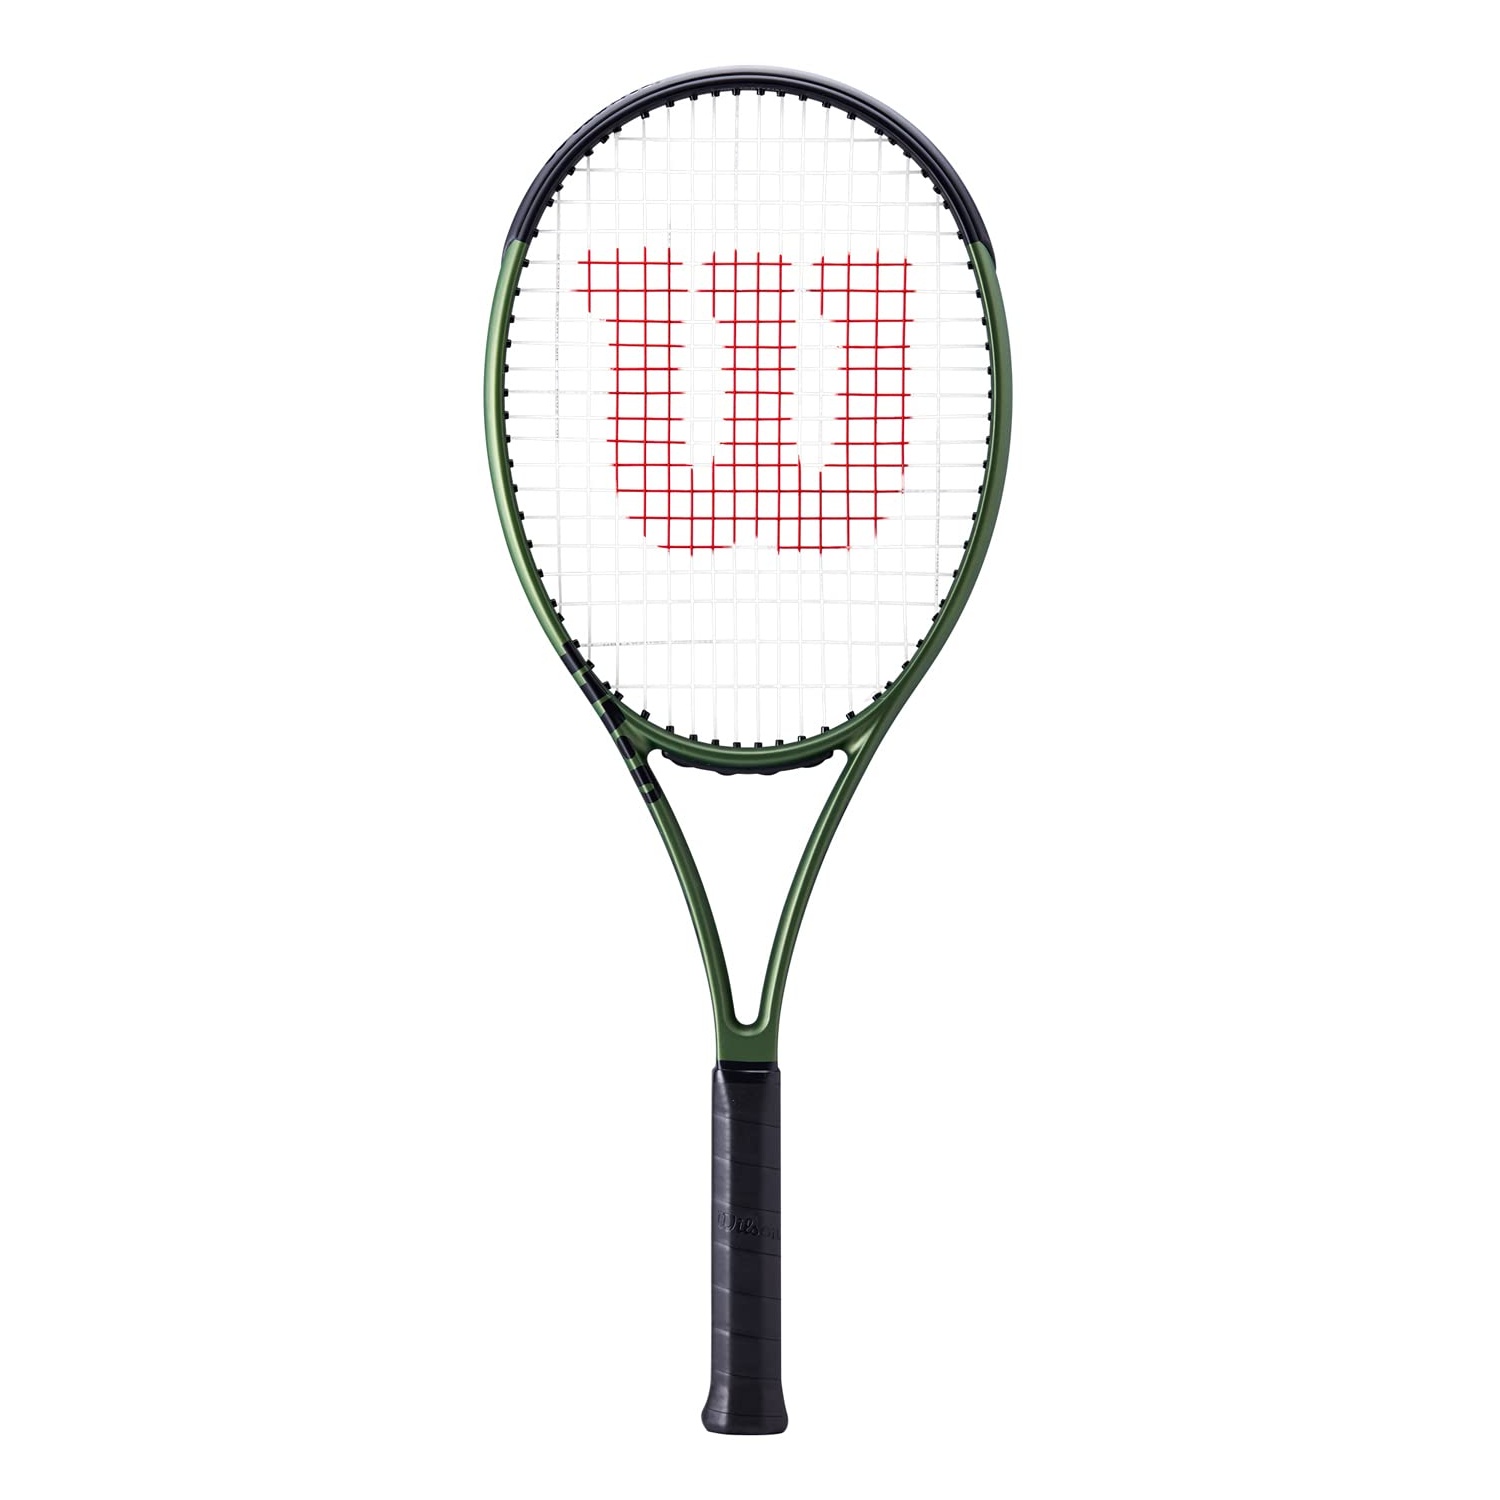 Bild Tennisschläger Blade 101L v8.0, Carbonfaser, Grifflastige Balance, 290 g, 68,6 cm Länge